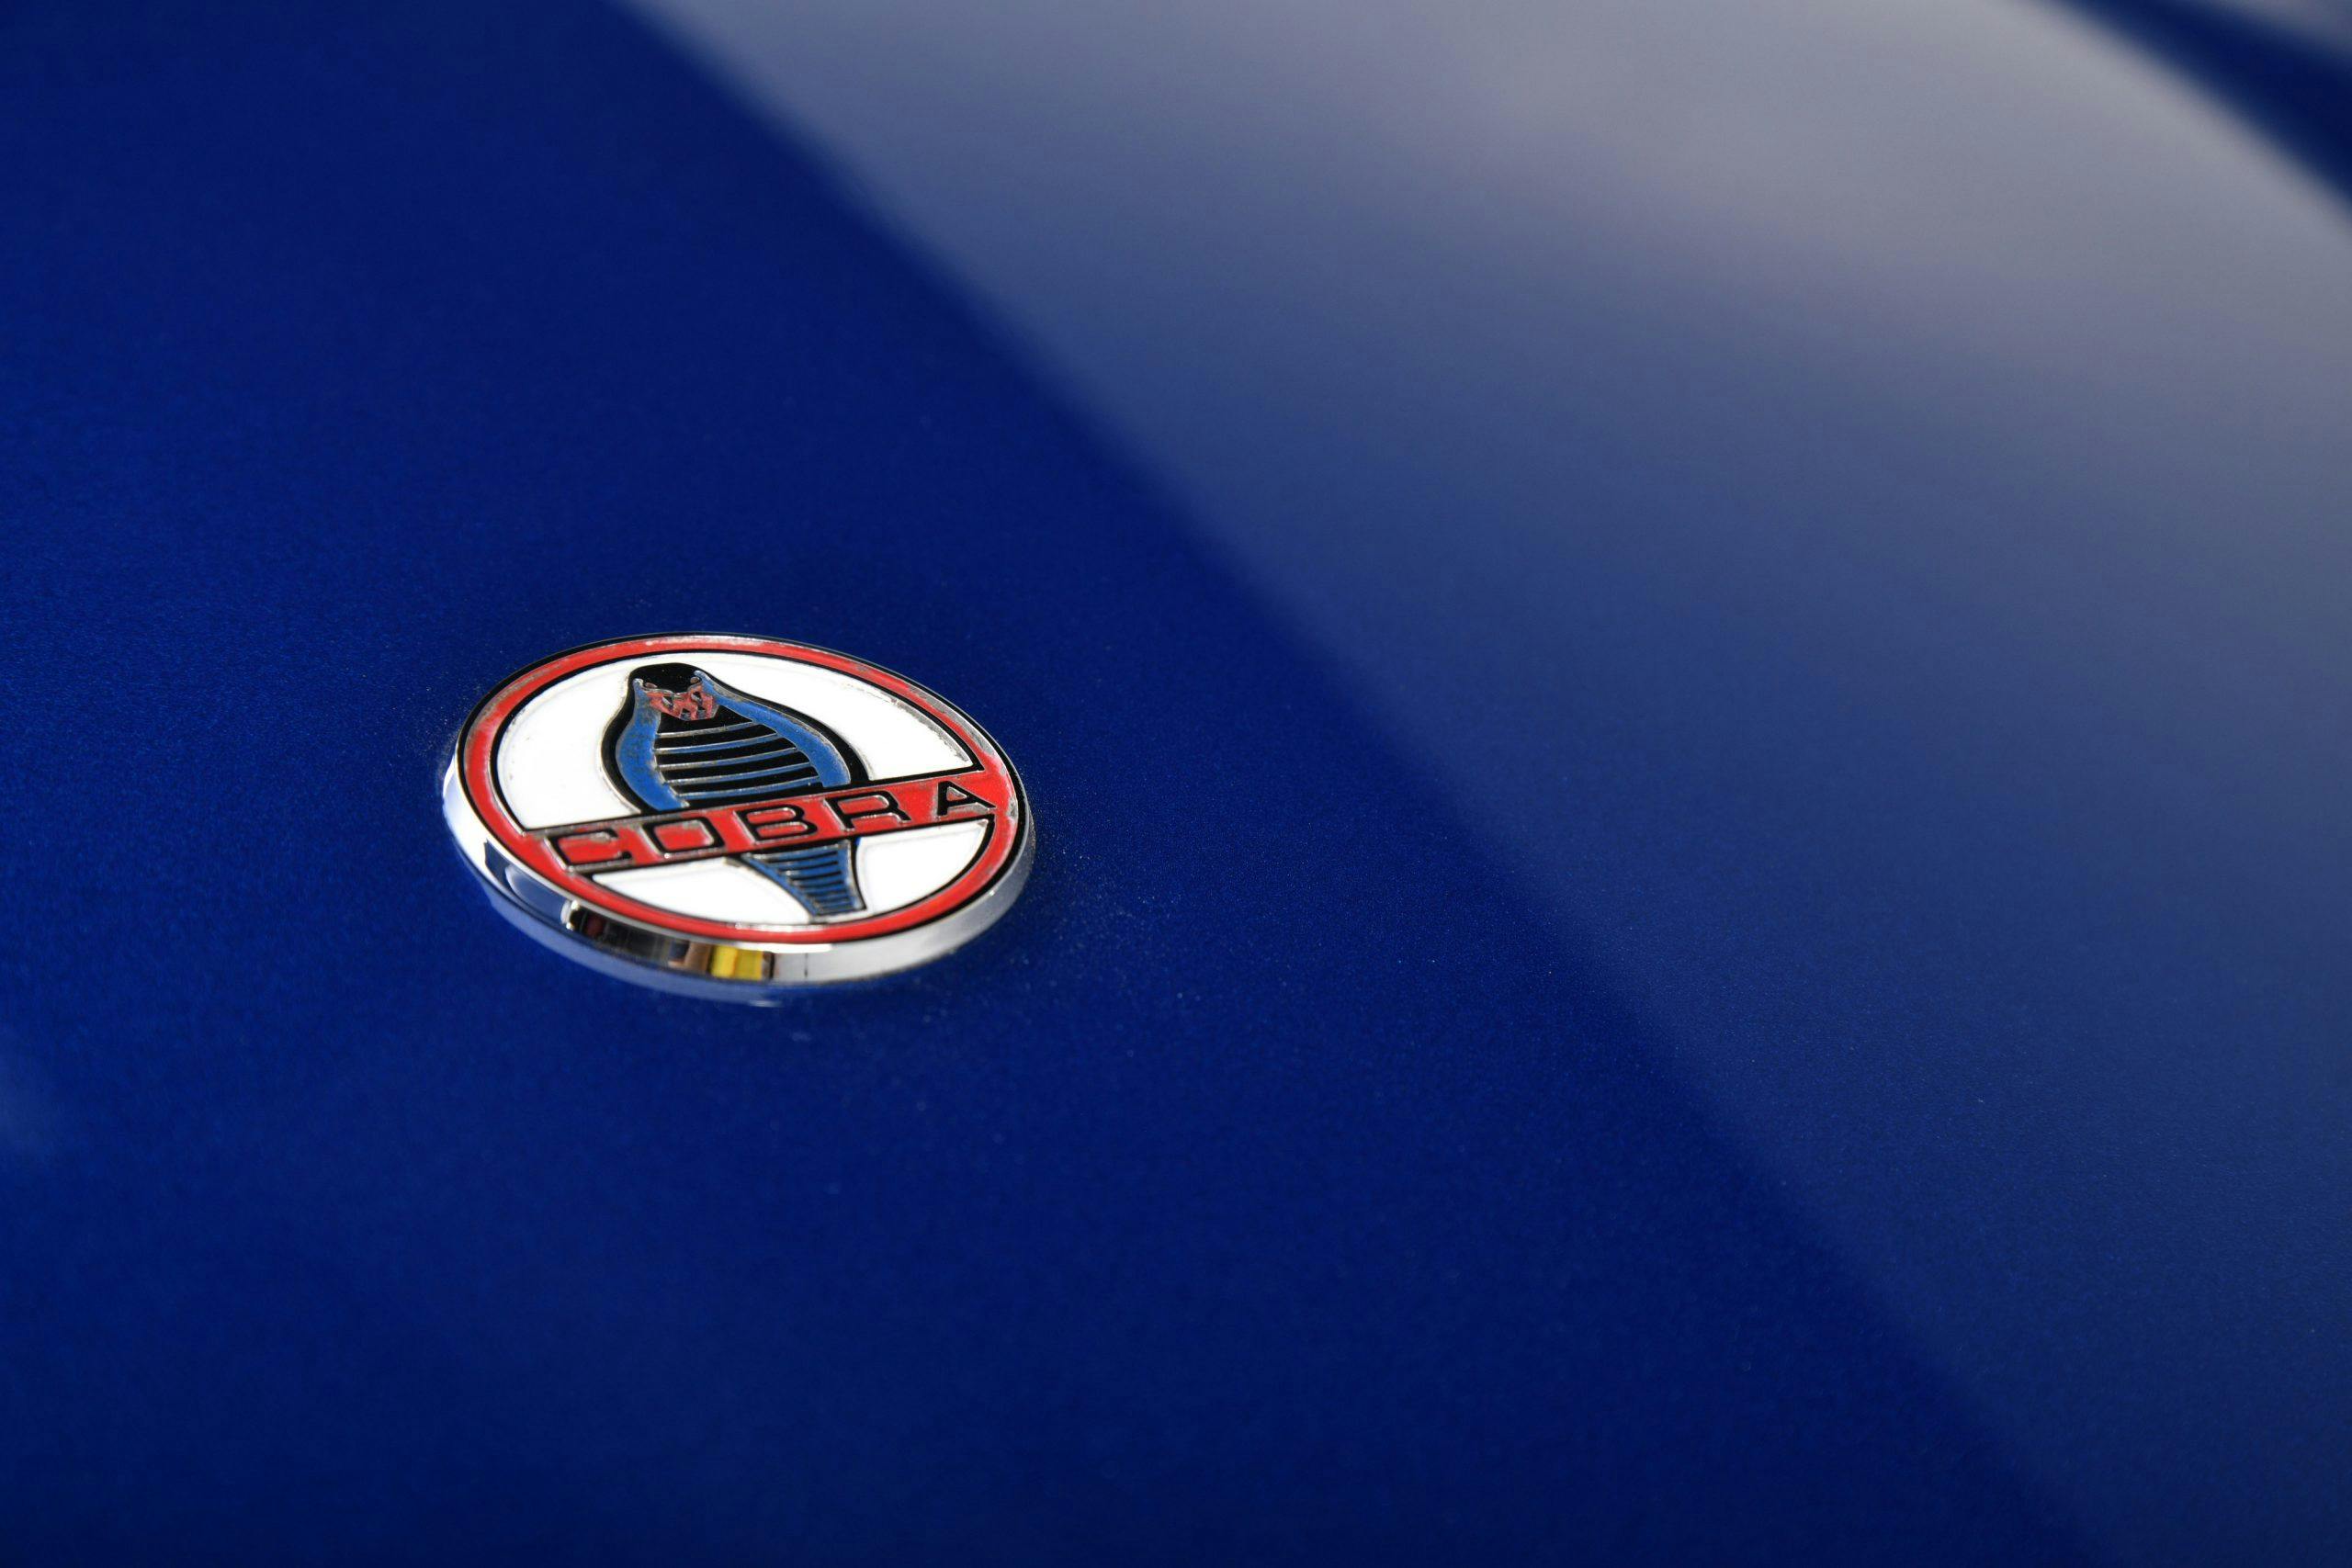 CSX 3015 Shelby Cobra badge detail